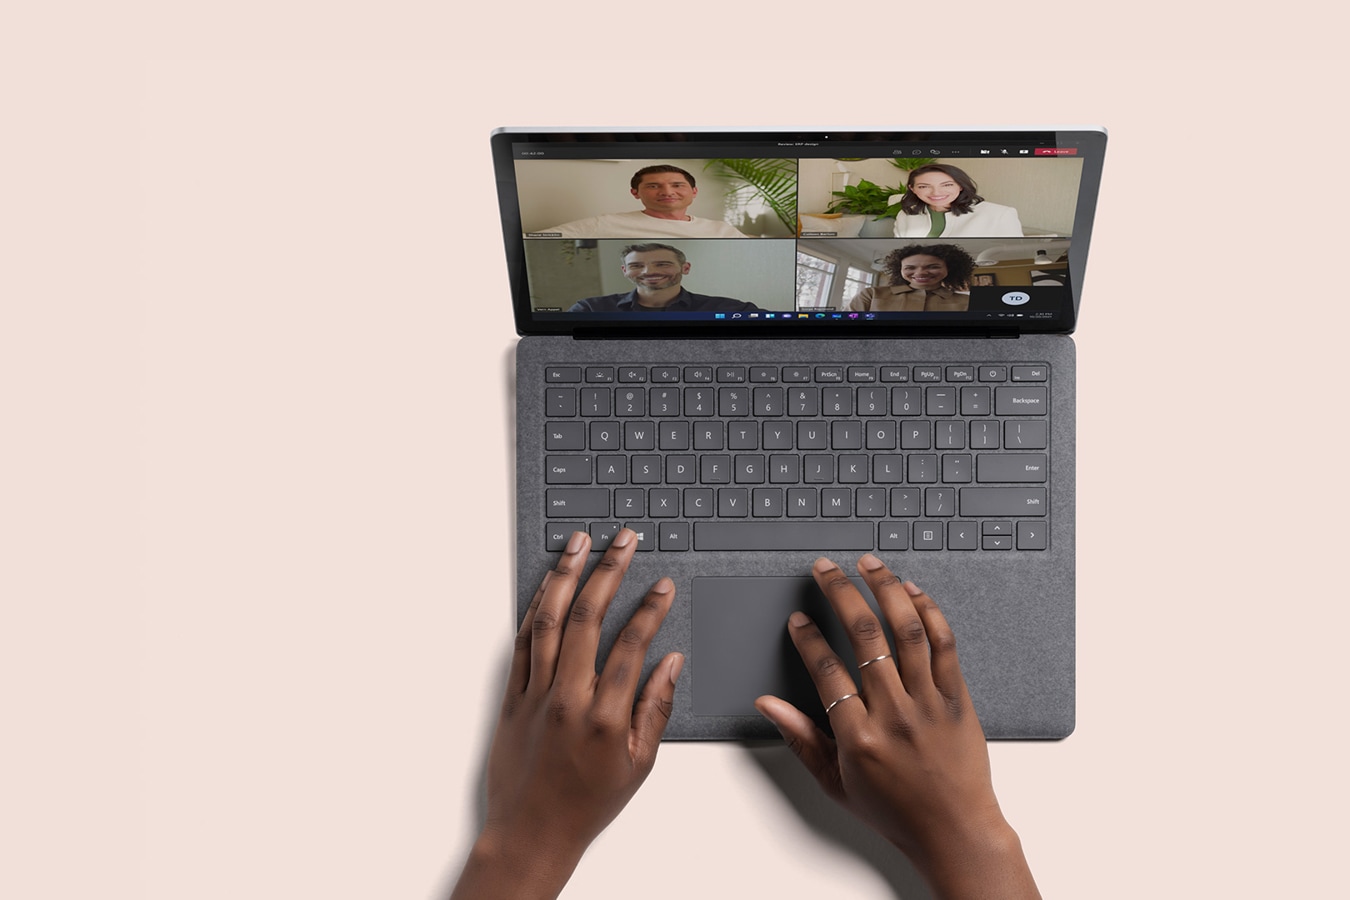 Laptop 4(플래티넘) 디바이스 하향식 보기. 화면에는 Microsoft Teams가 표시되어 있습니다.
